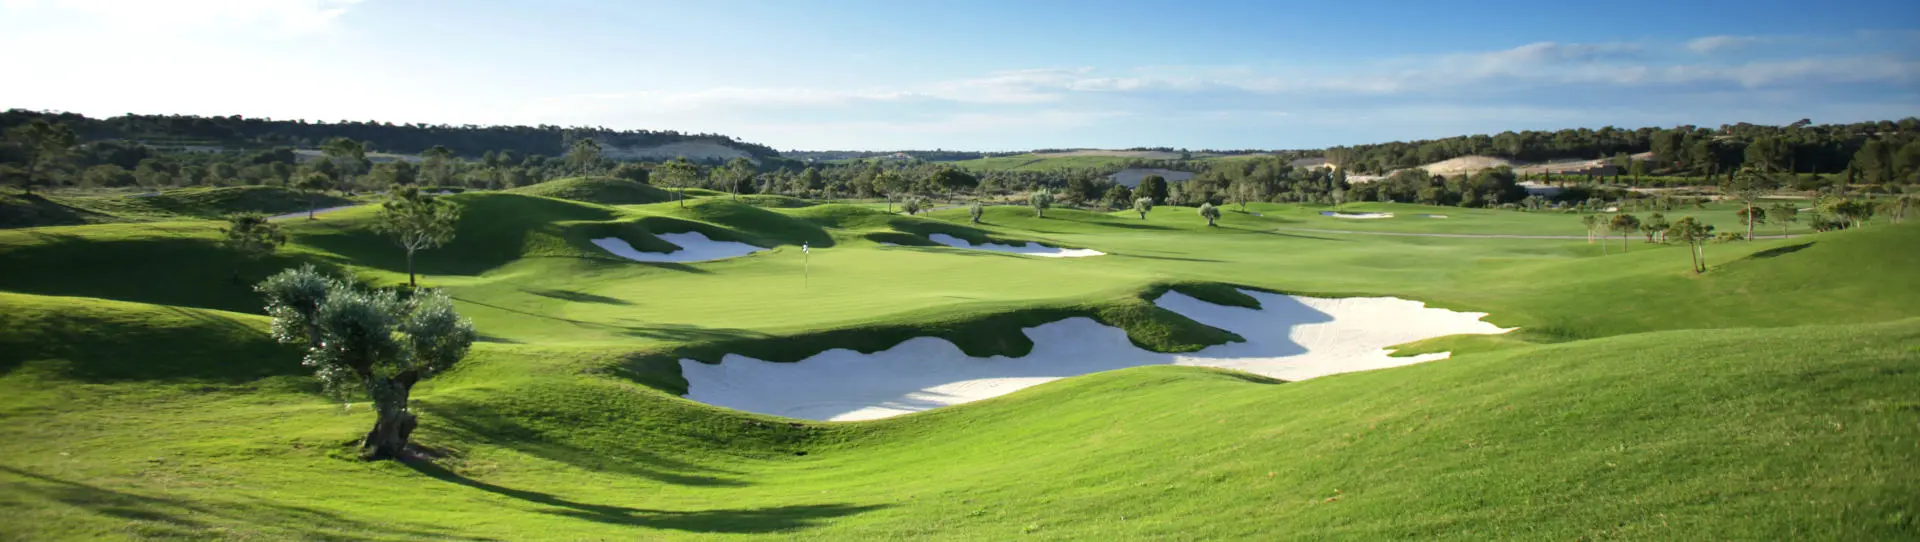 Spain golf courses - Las Colinas Golf & Country Club - Photo 1